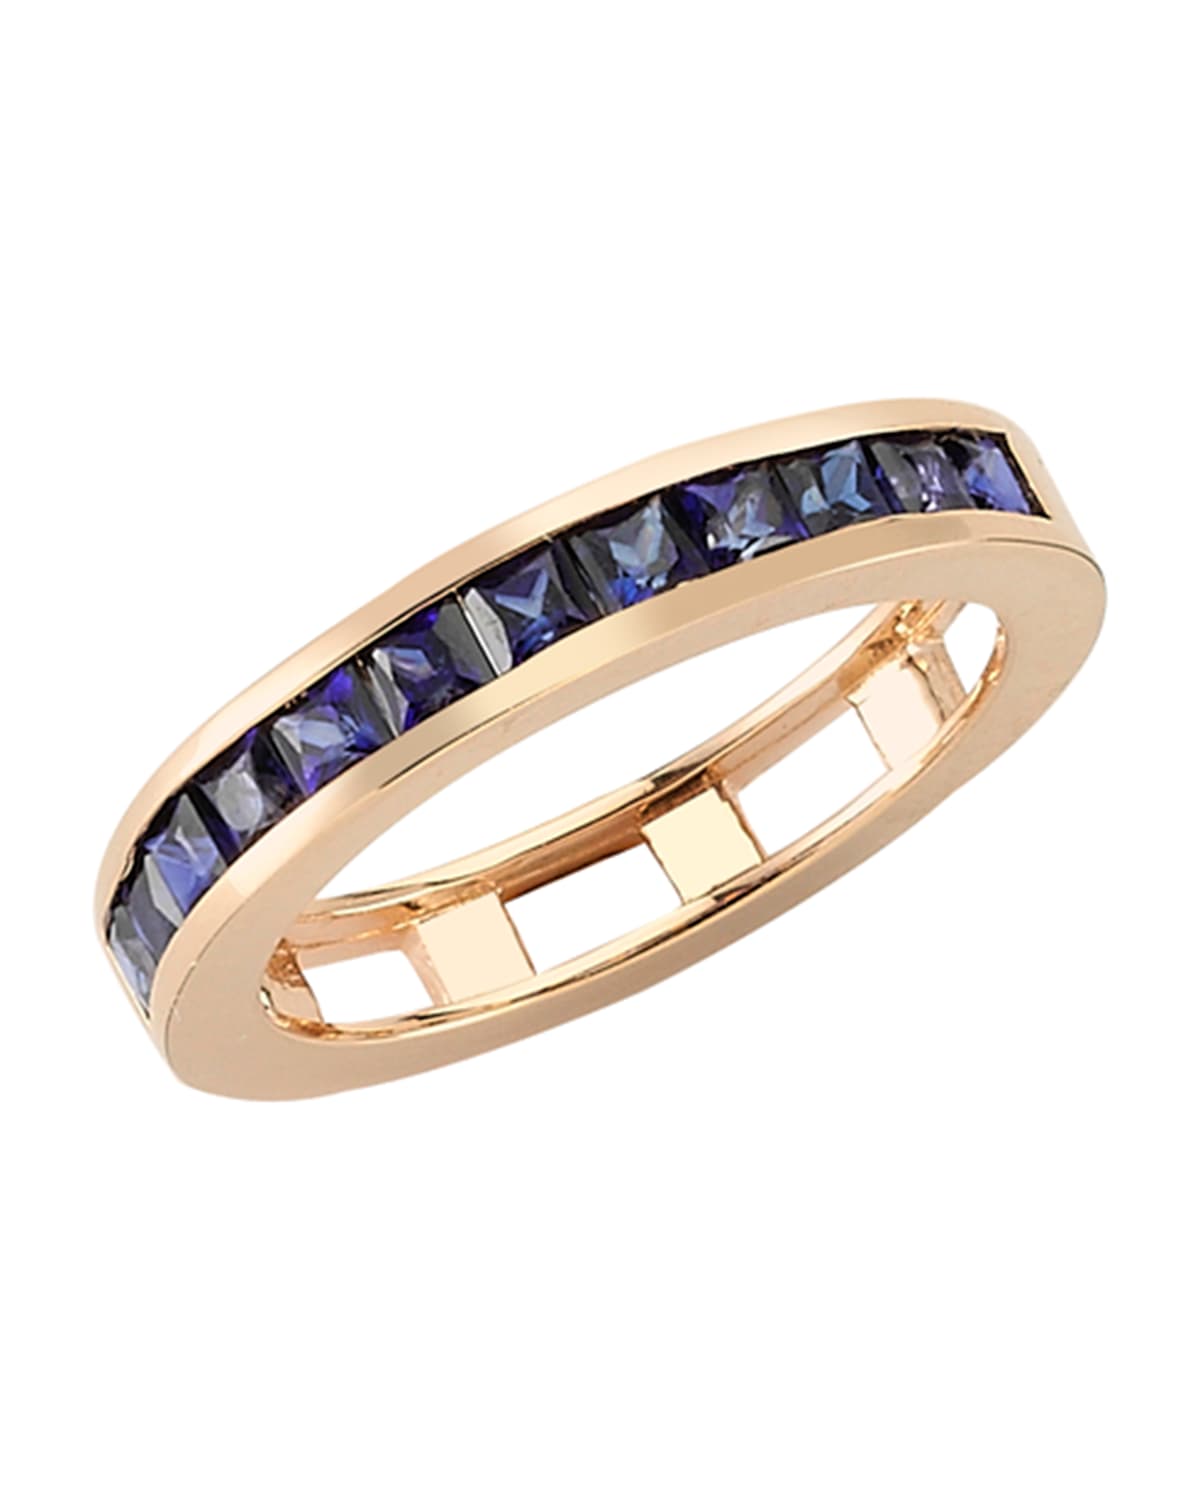 BeeGoddess Mondrian Blue Sapphire Ring, Size 7